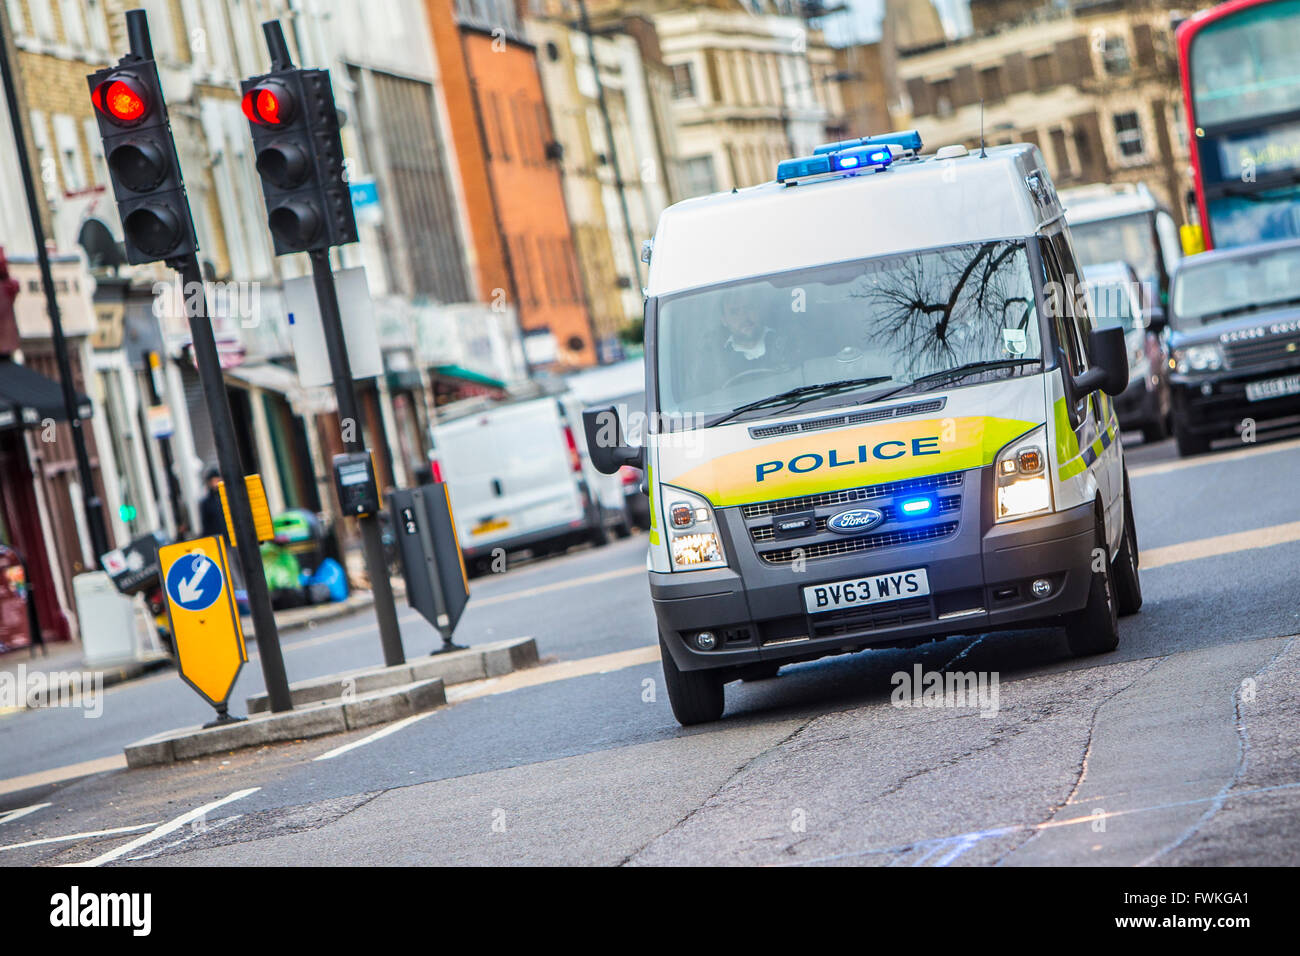 Police Van Responding to an Emergency London UK Stock Photo